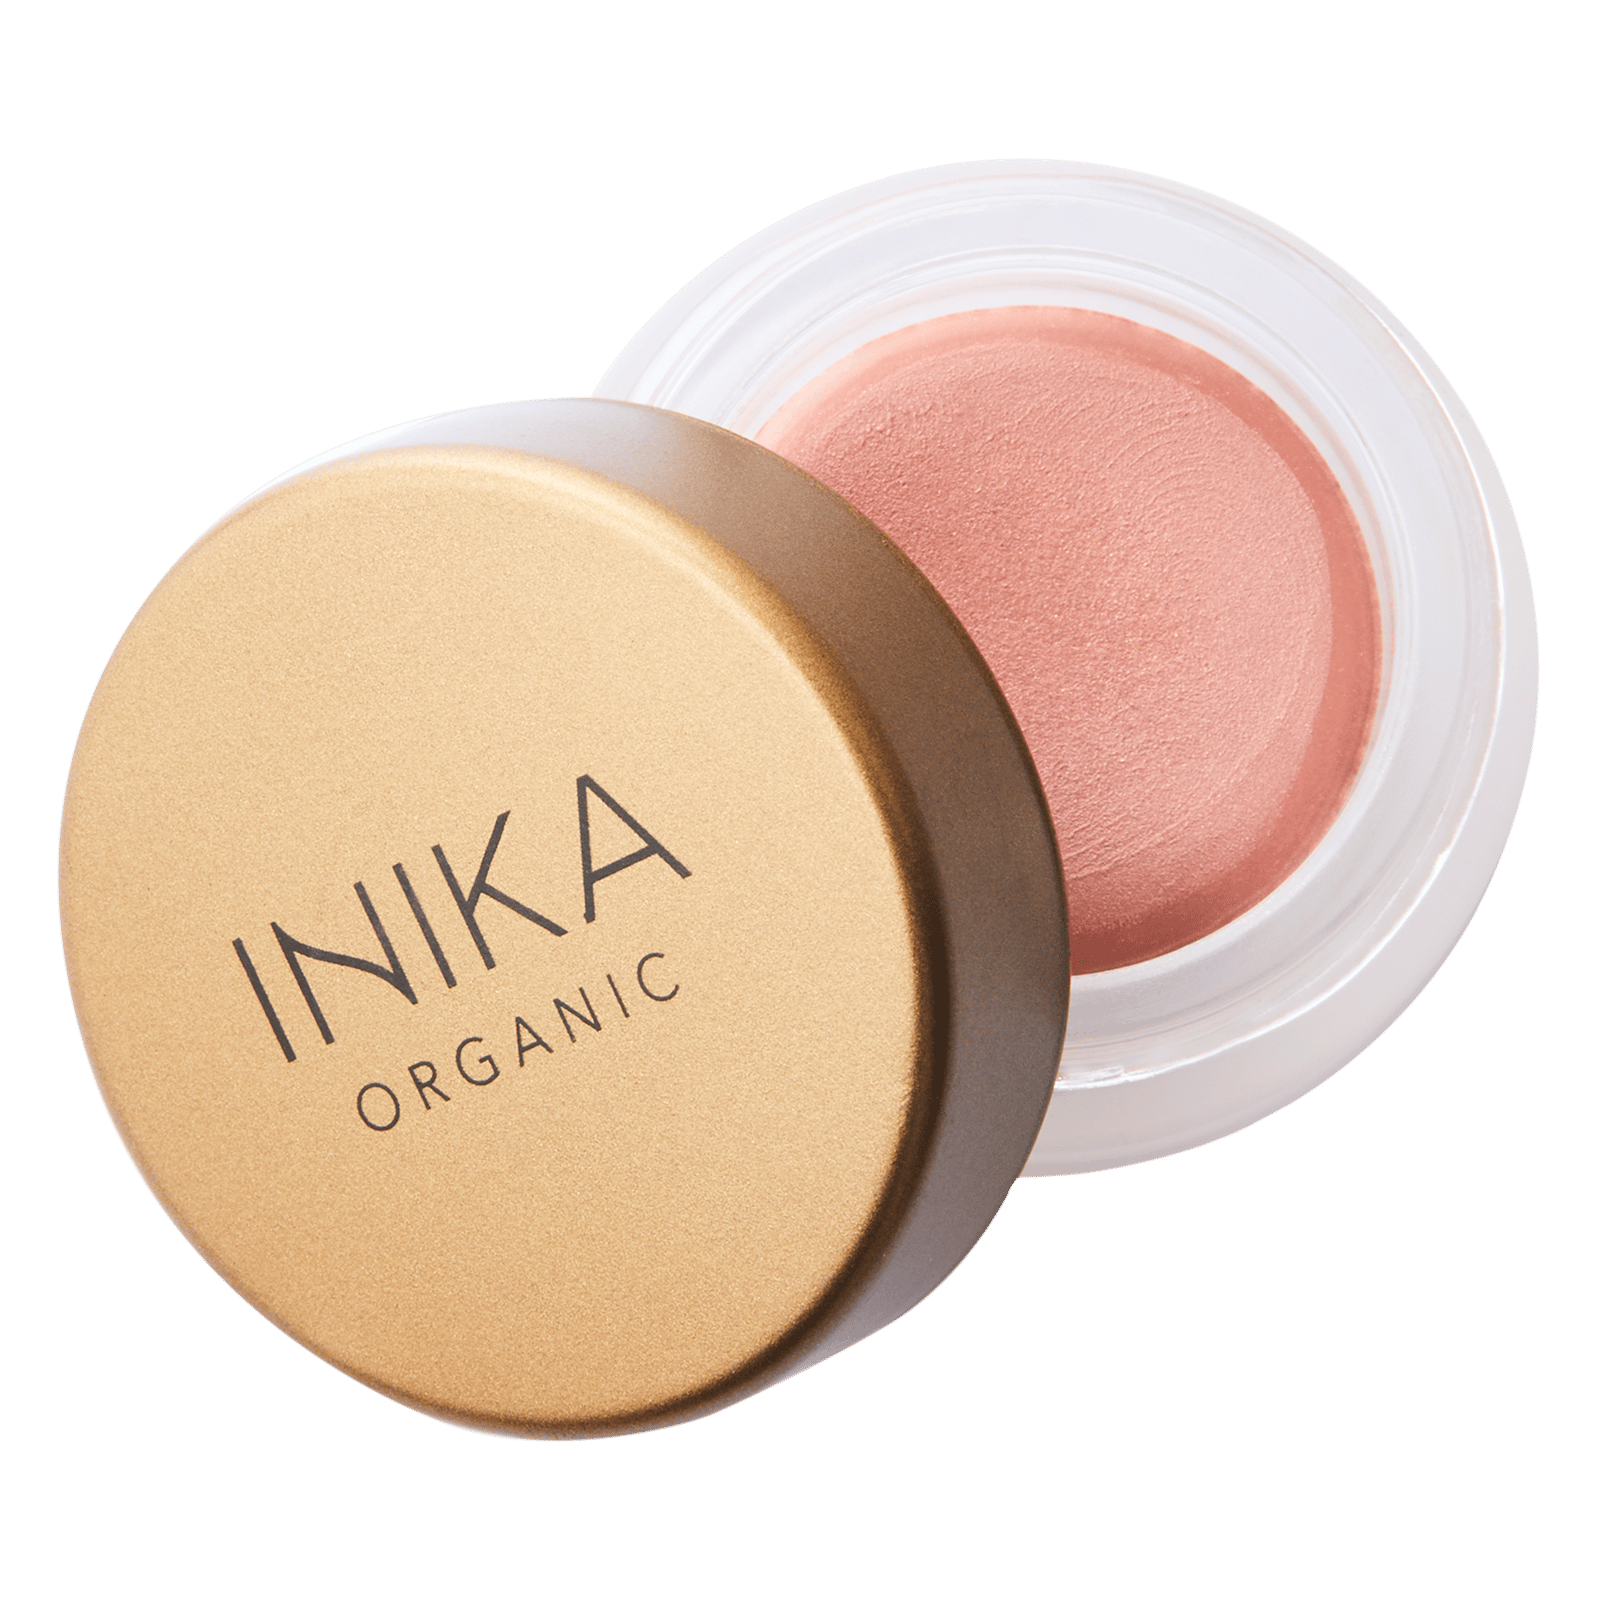 INIKA ORGANIC Lip & Cheek Cream Dusk 3,5g